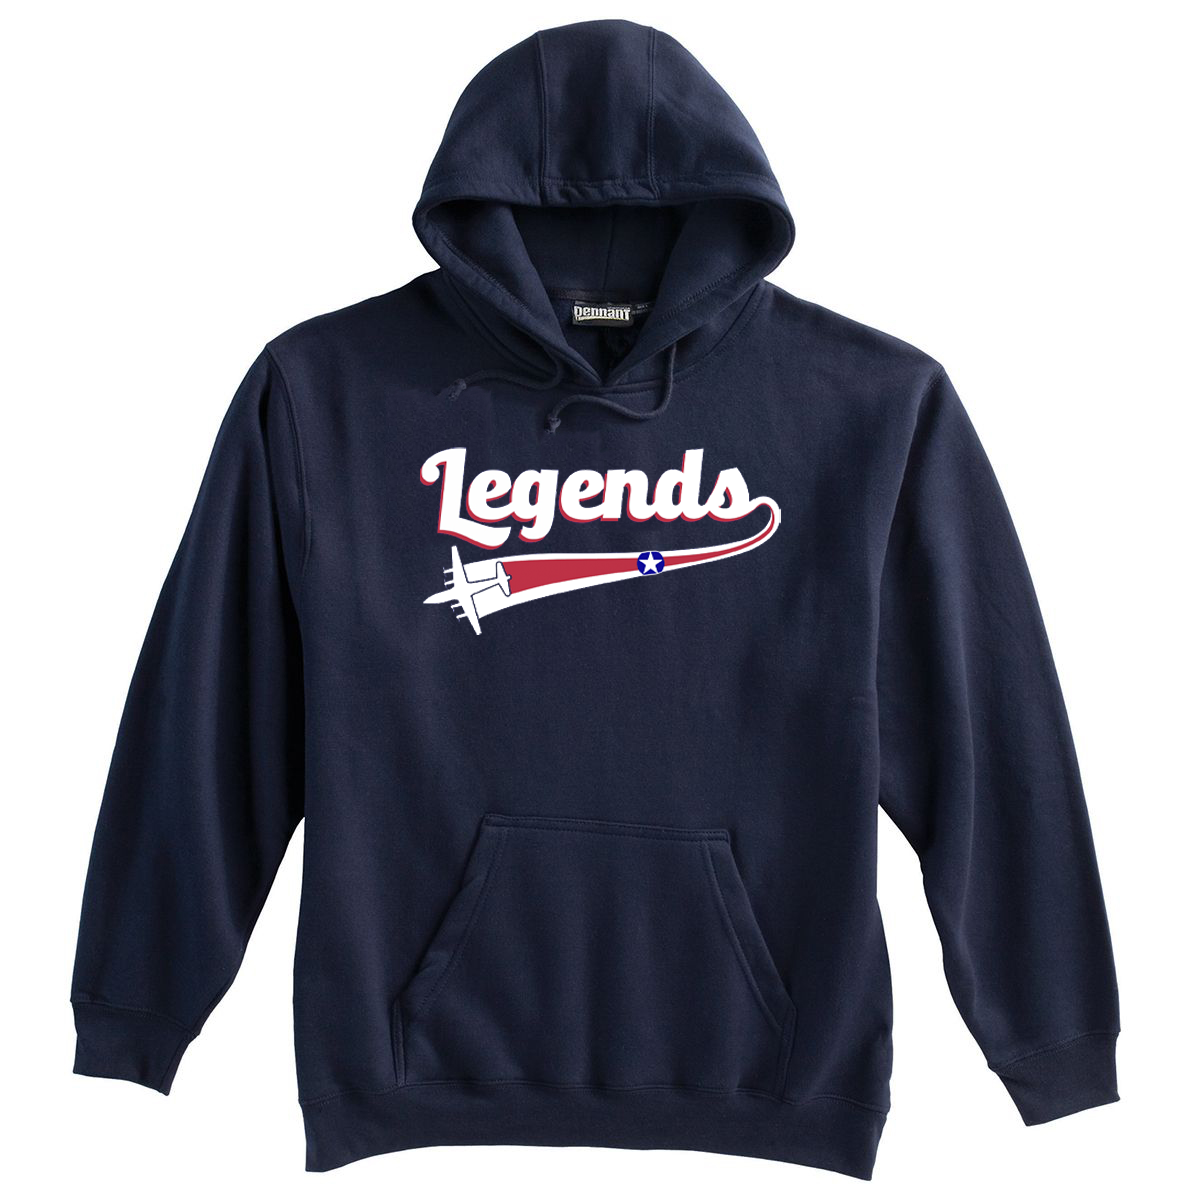 B17 Legends Baseball Sweatshirt